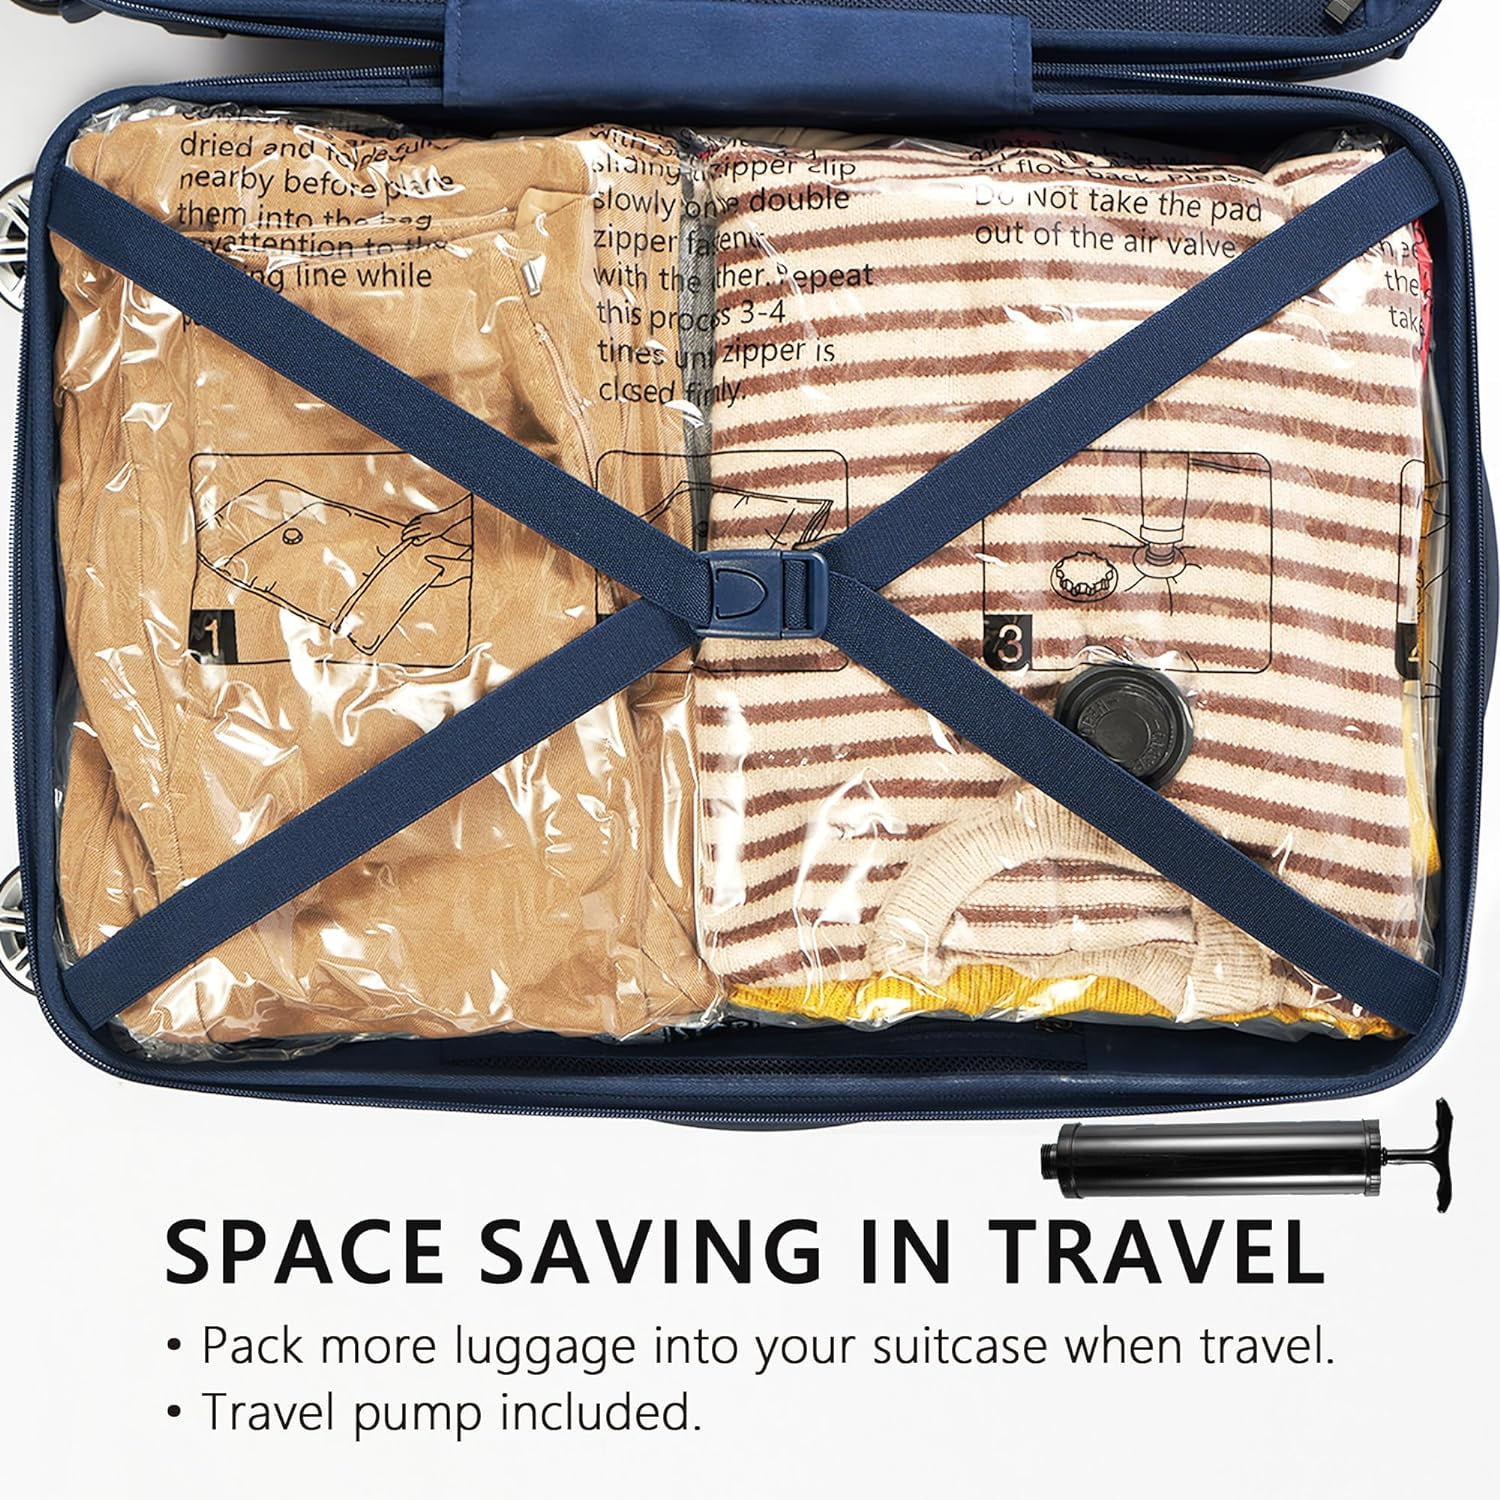 SUOCO Vacuum Storage Bags 8 Pack (4 x Large, 4 x Jumbo) Space